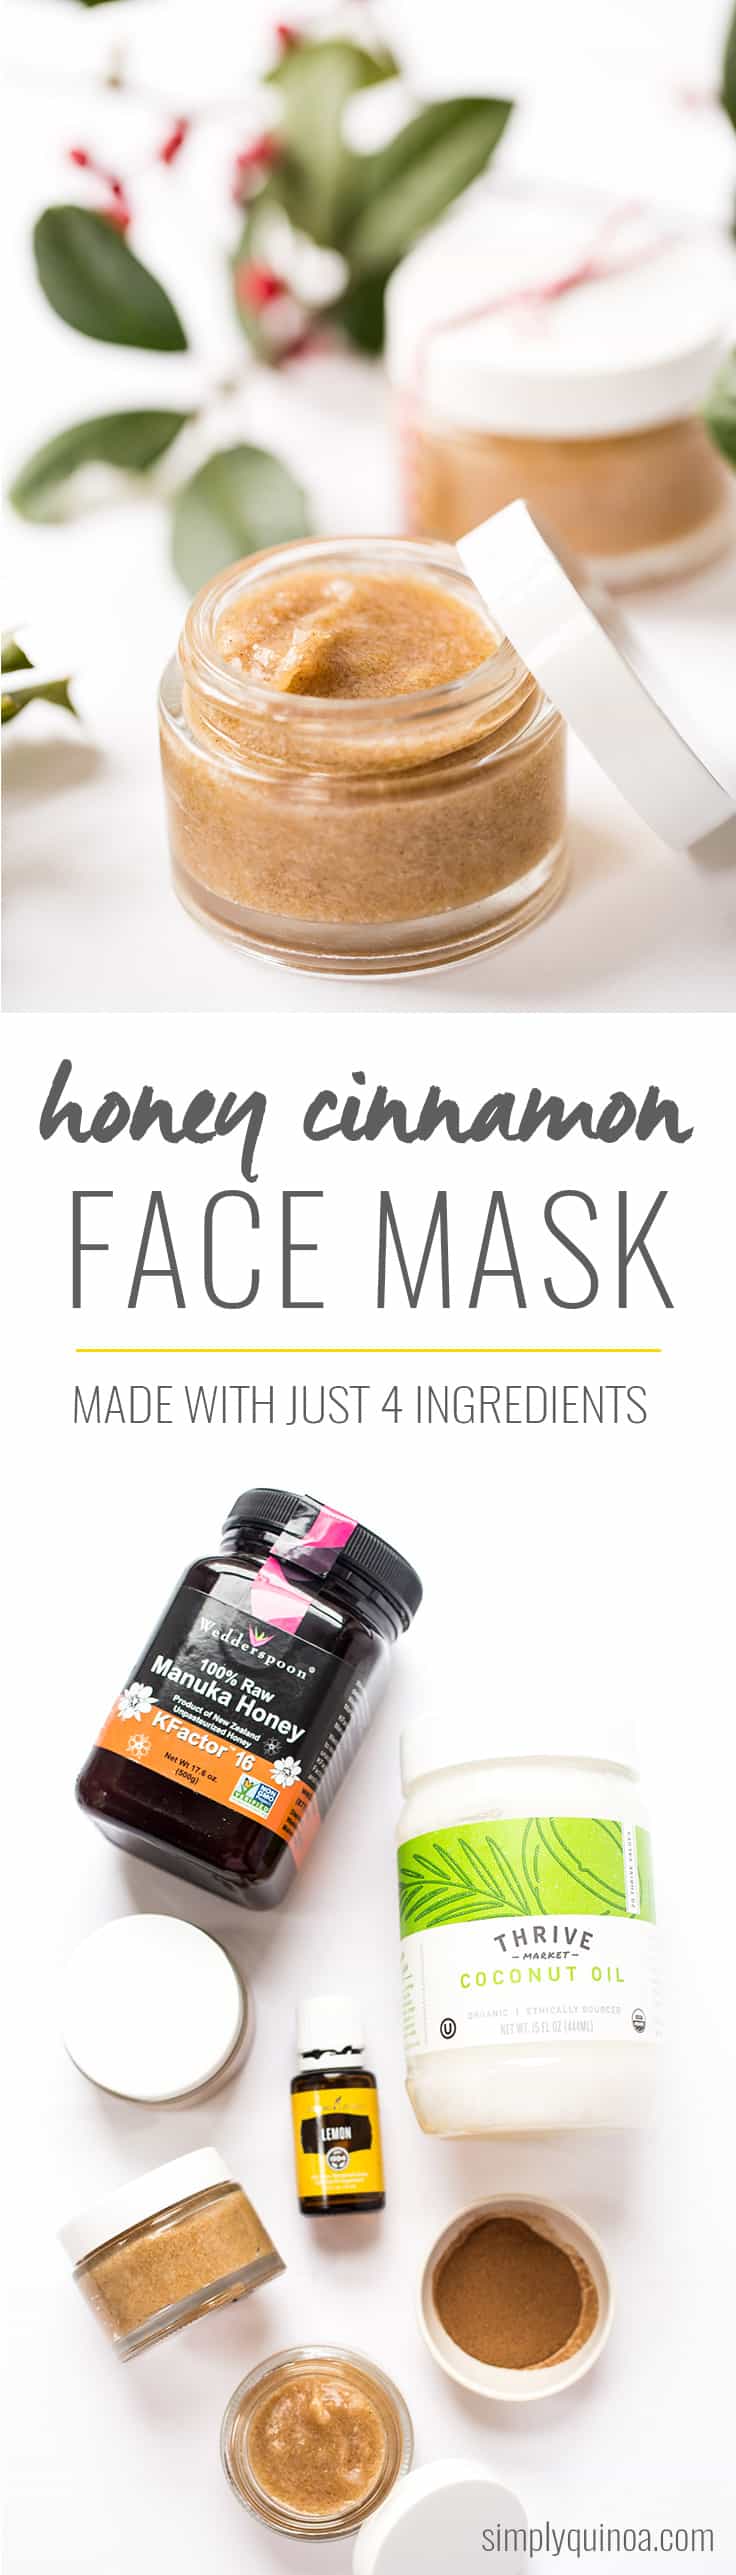 Diy Honey Cinnamon Face Mask Simply Quinoa